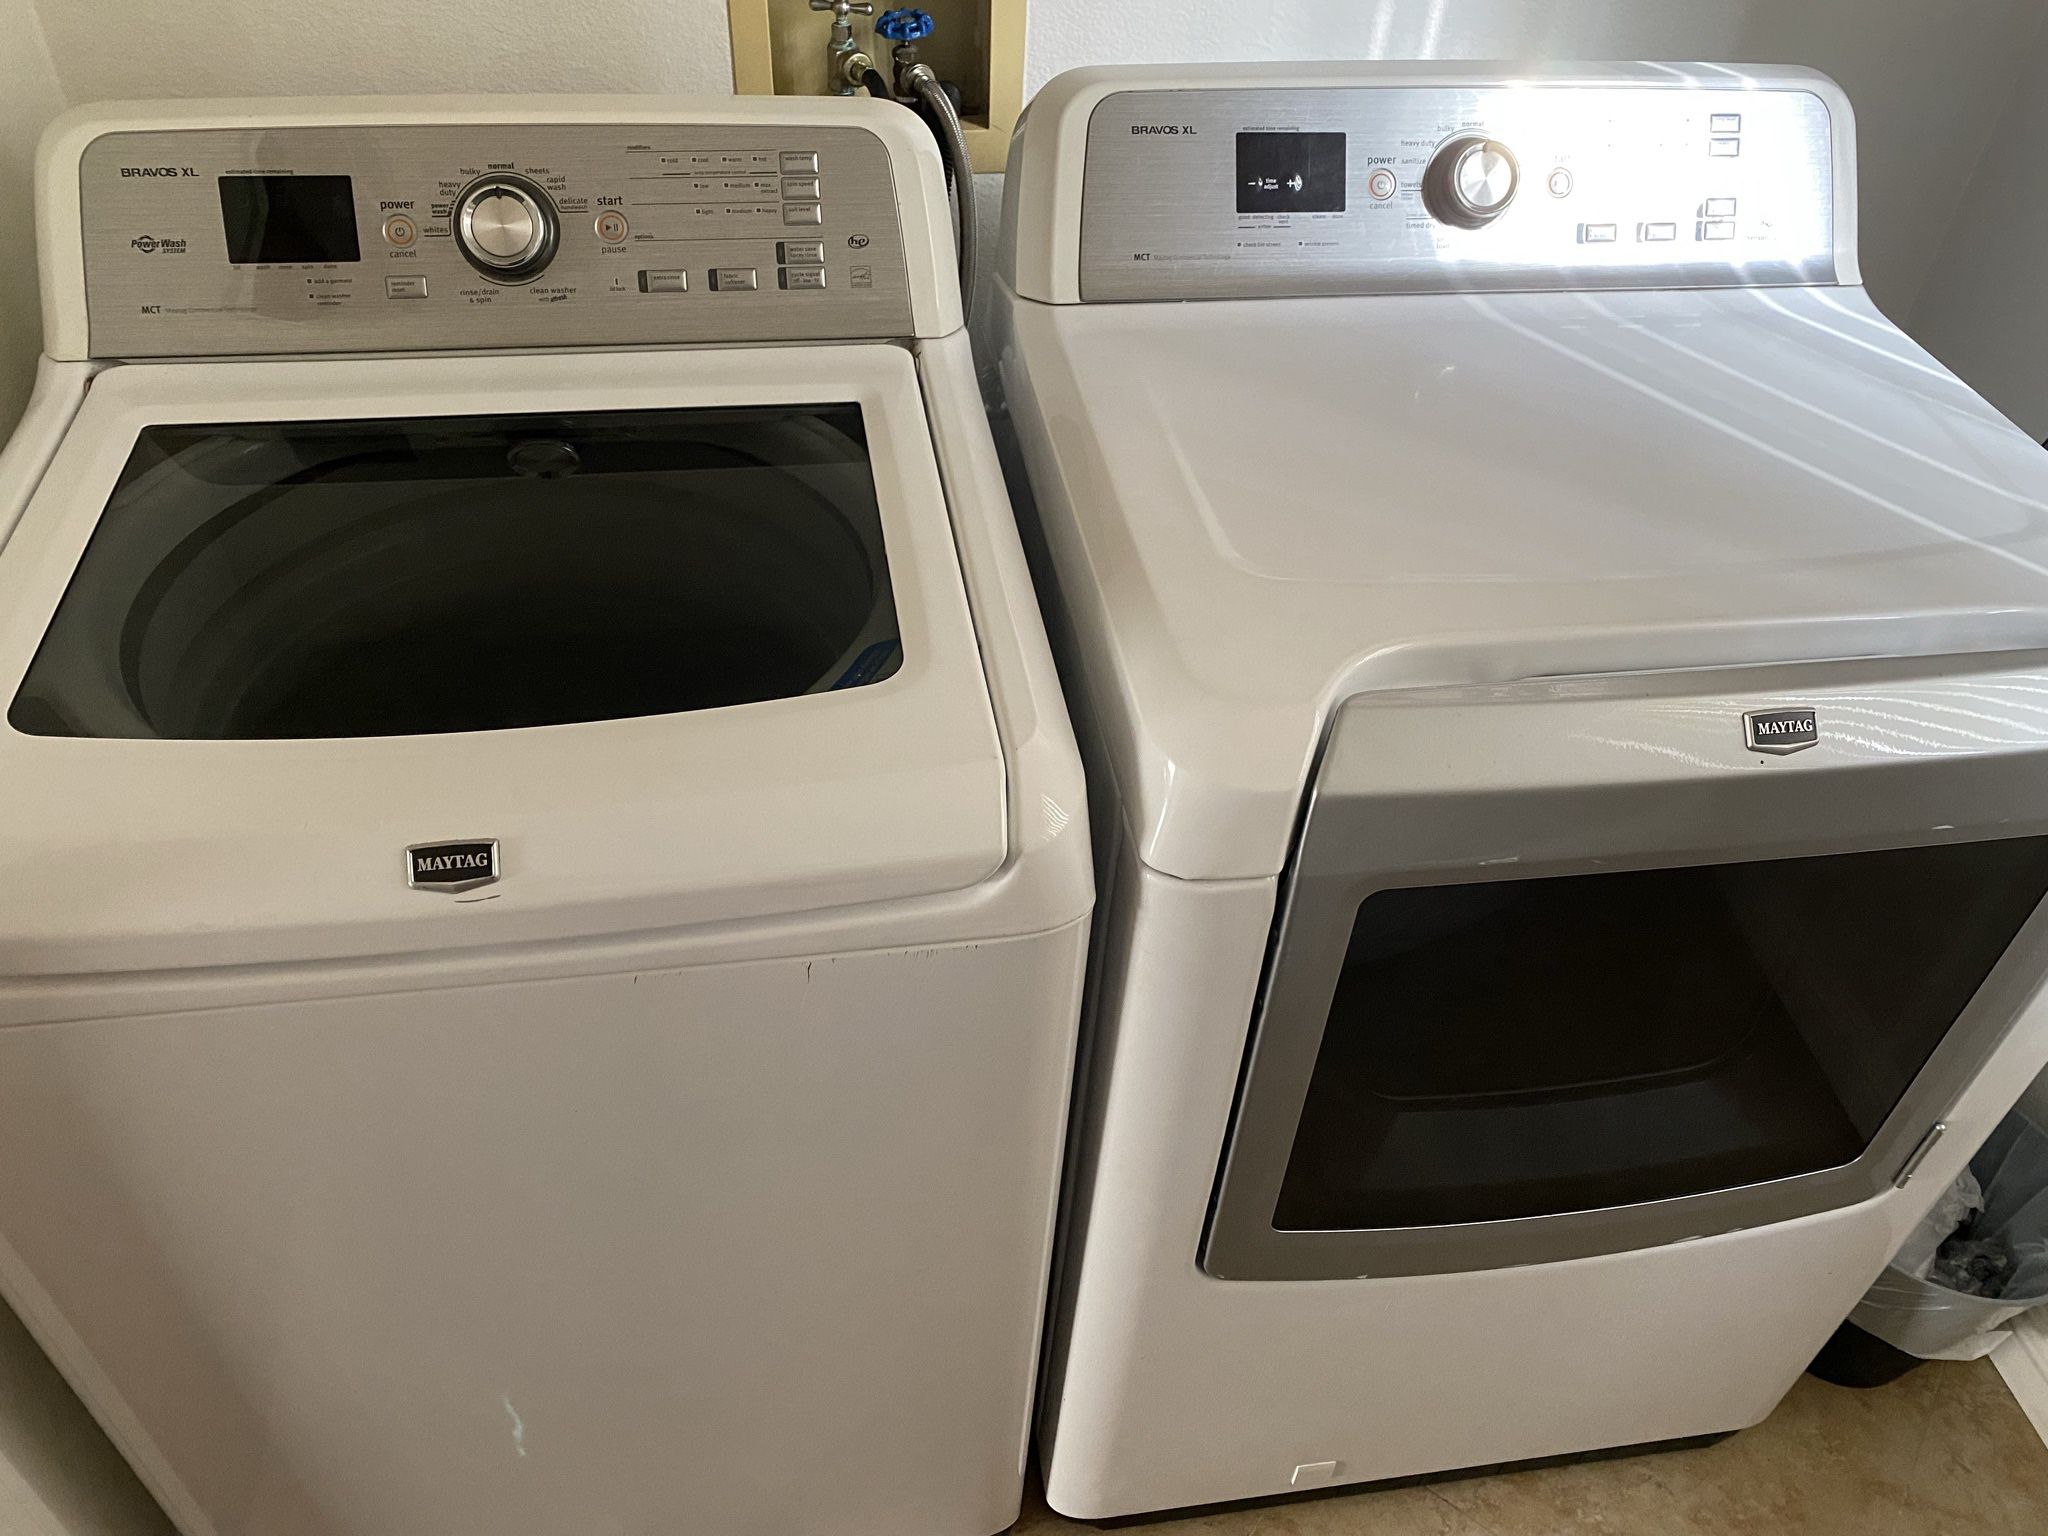 Maytag BRAVOS XL Washer & gas Dryer